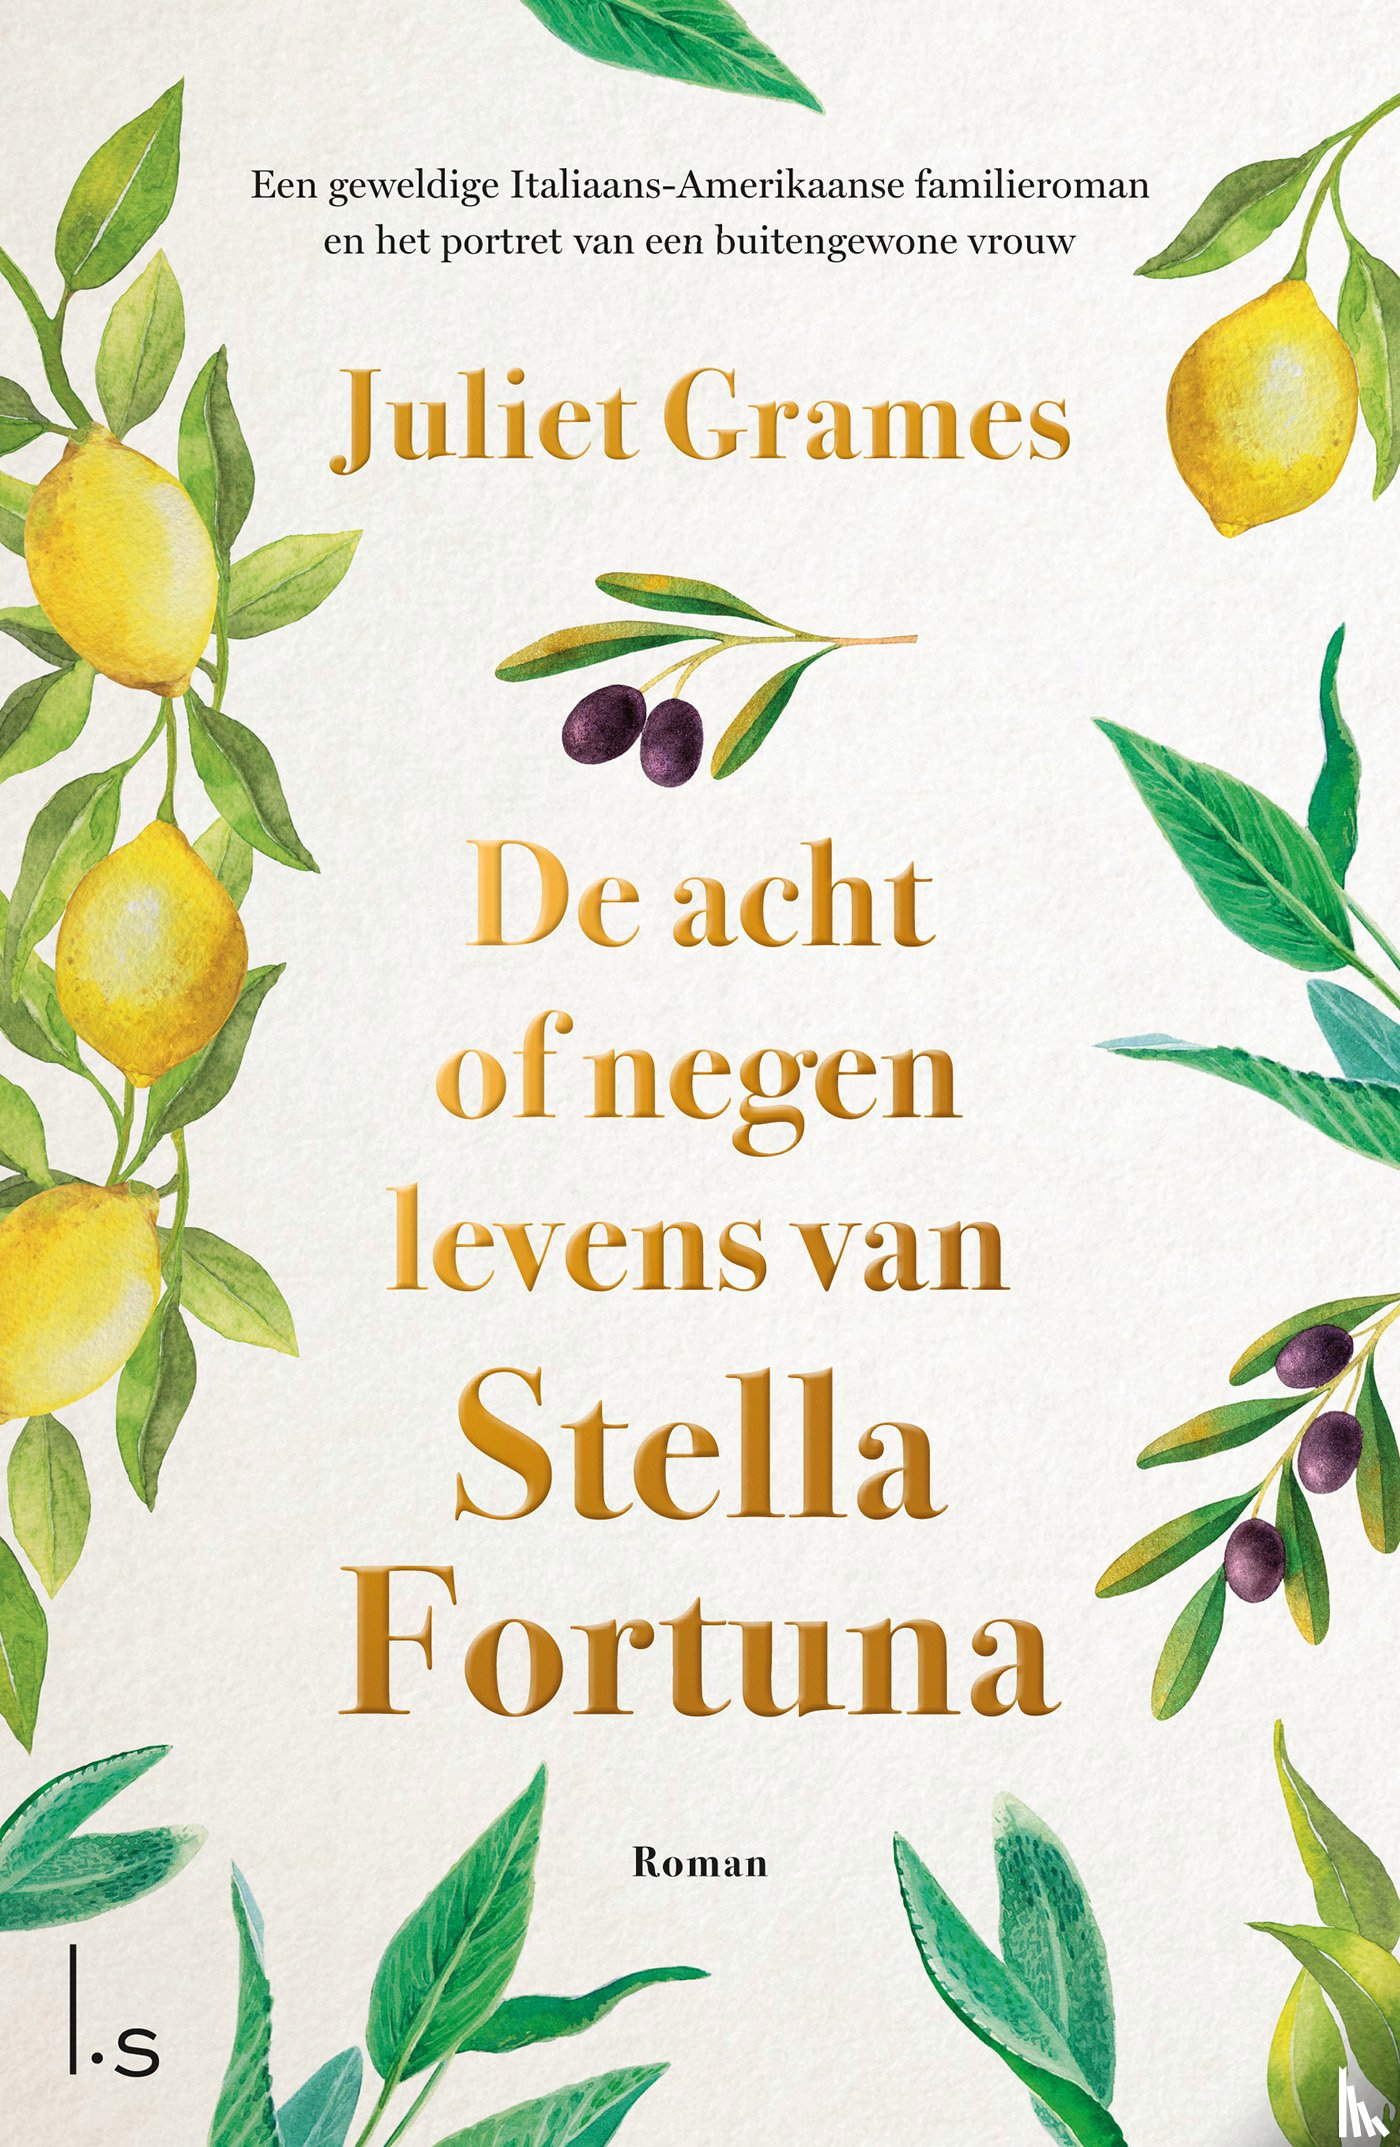 Grames, Juliet - De acht of negen levens van Stella Fortuna